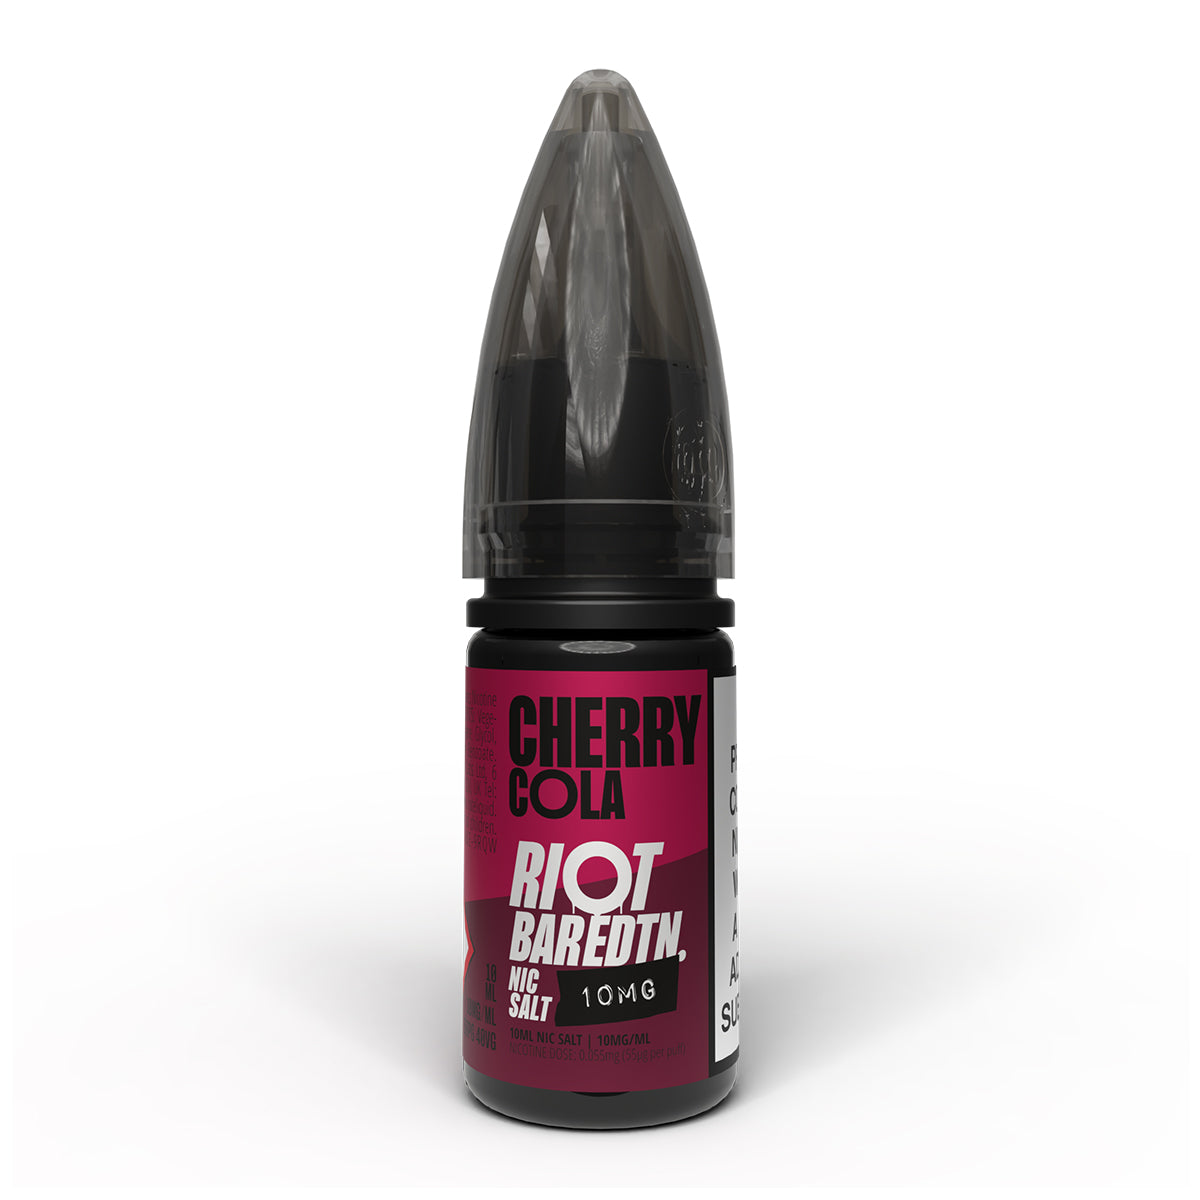 Cherry Cola 10ml Nicotine Salt 10mg by Riot Bar Edtn